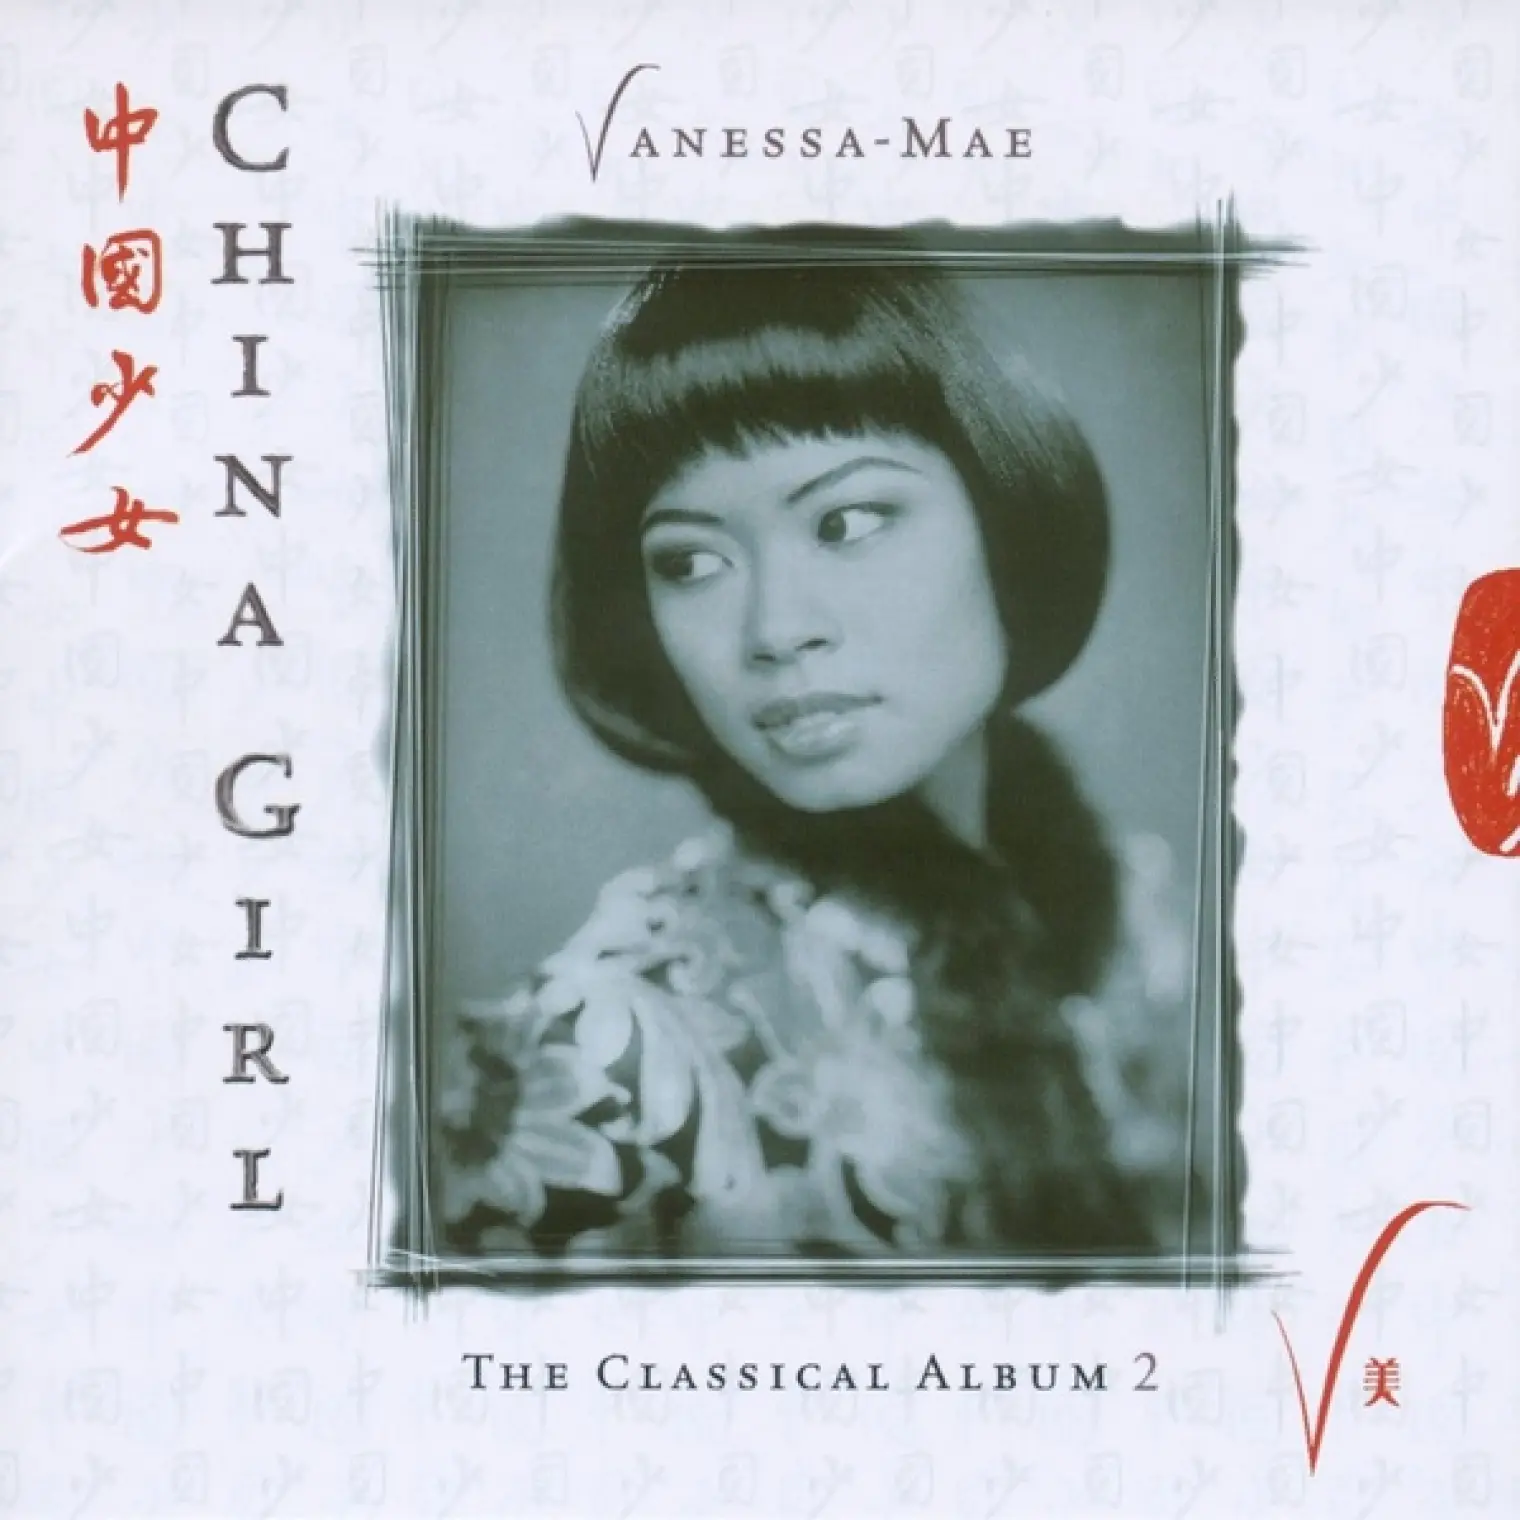 China Girl - The Classical Album 2 -  Vanessa-Mae 